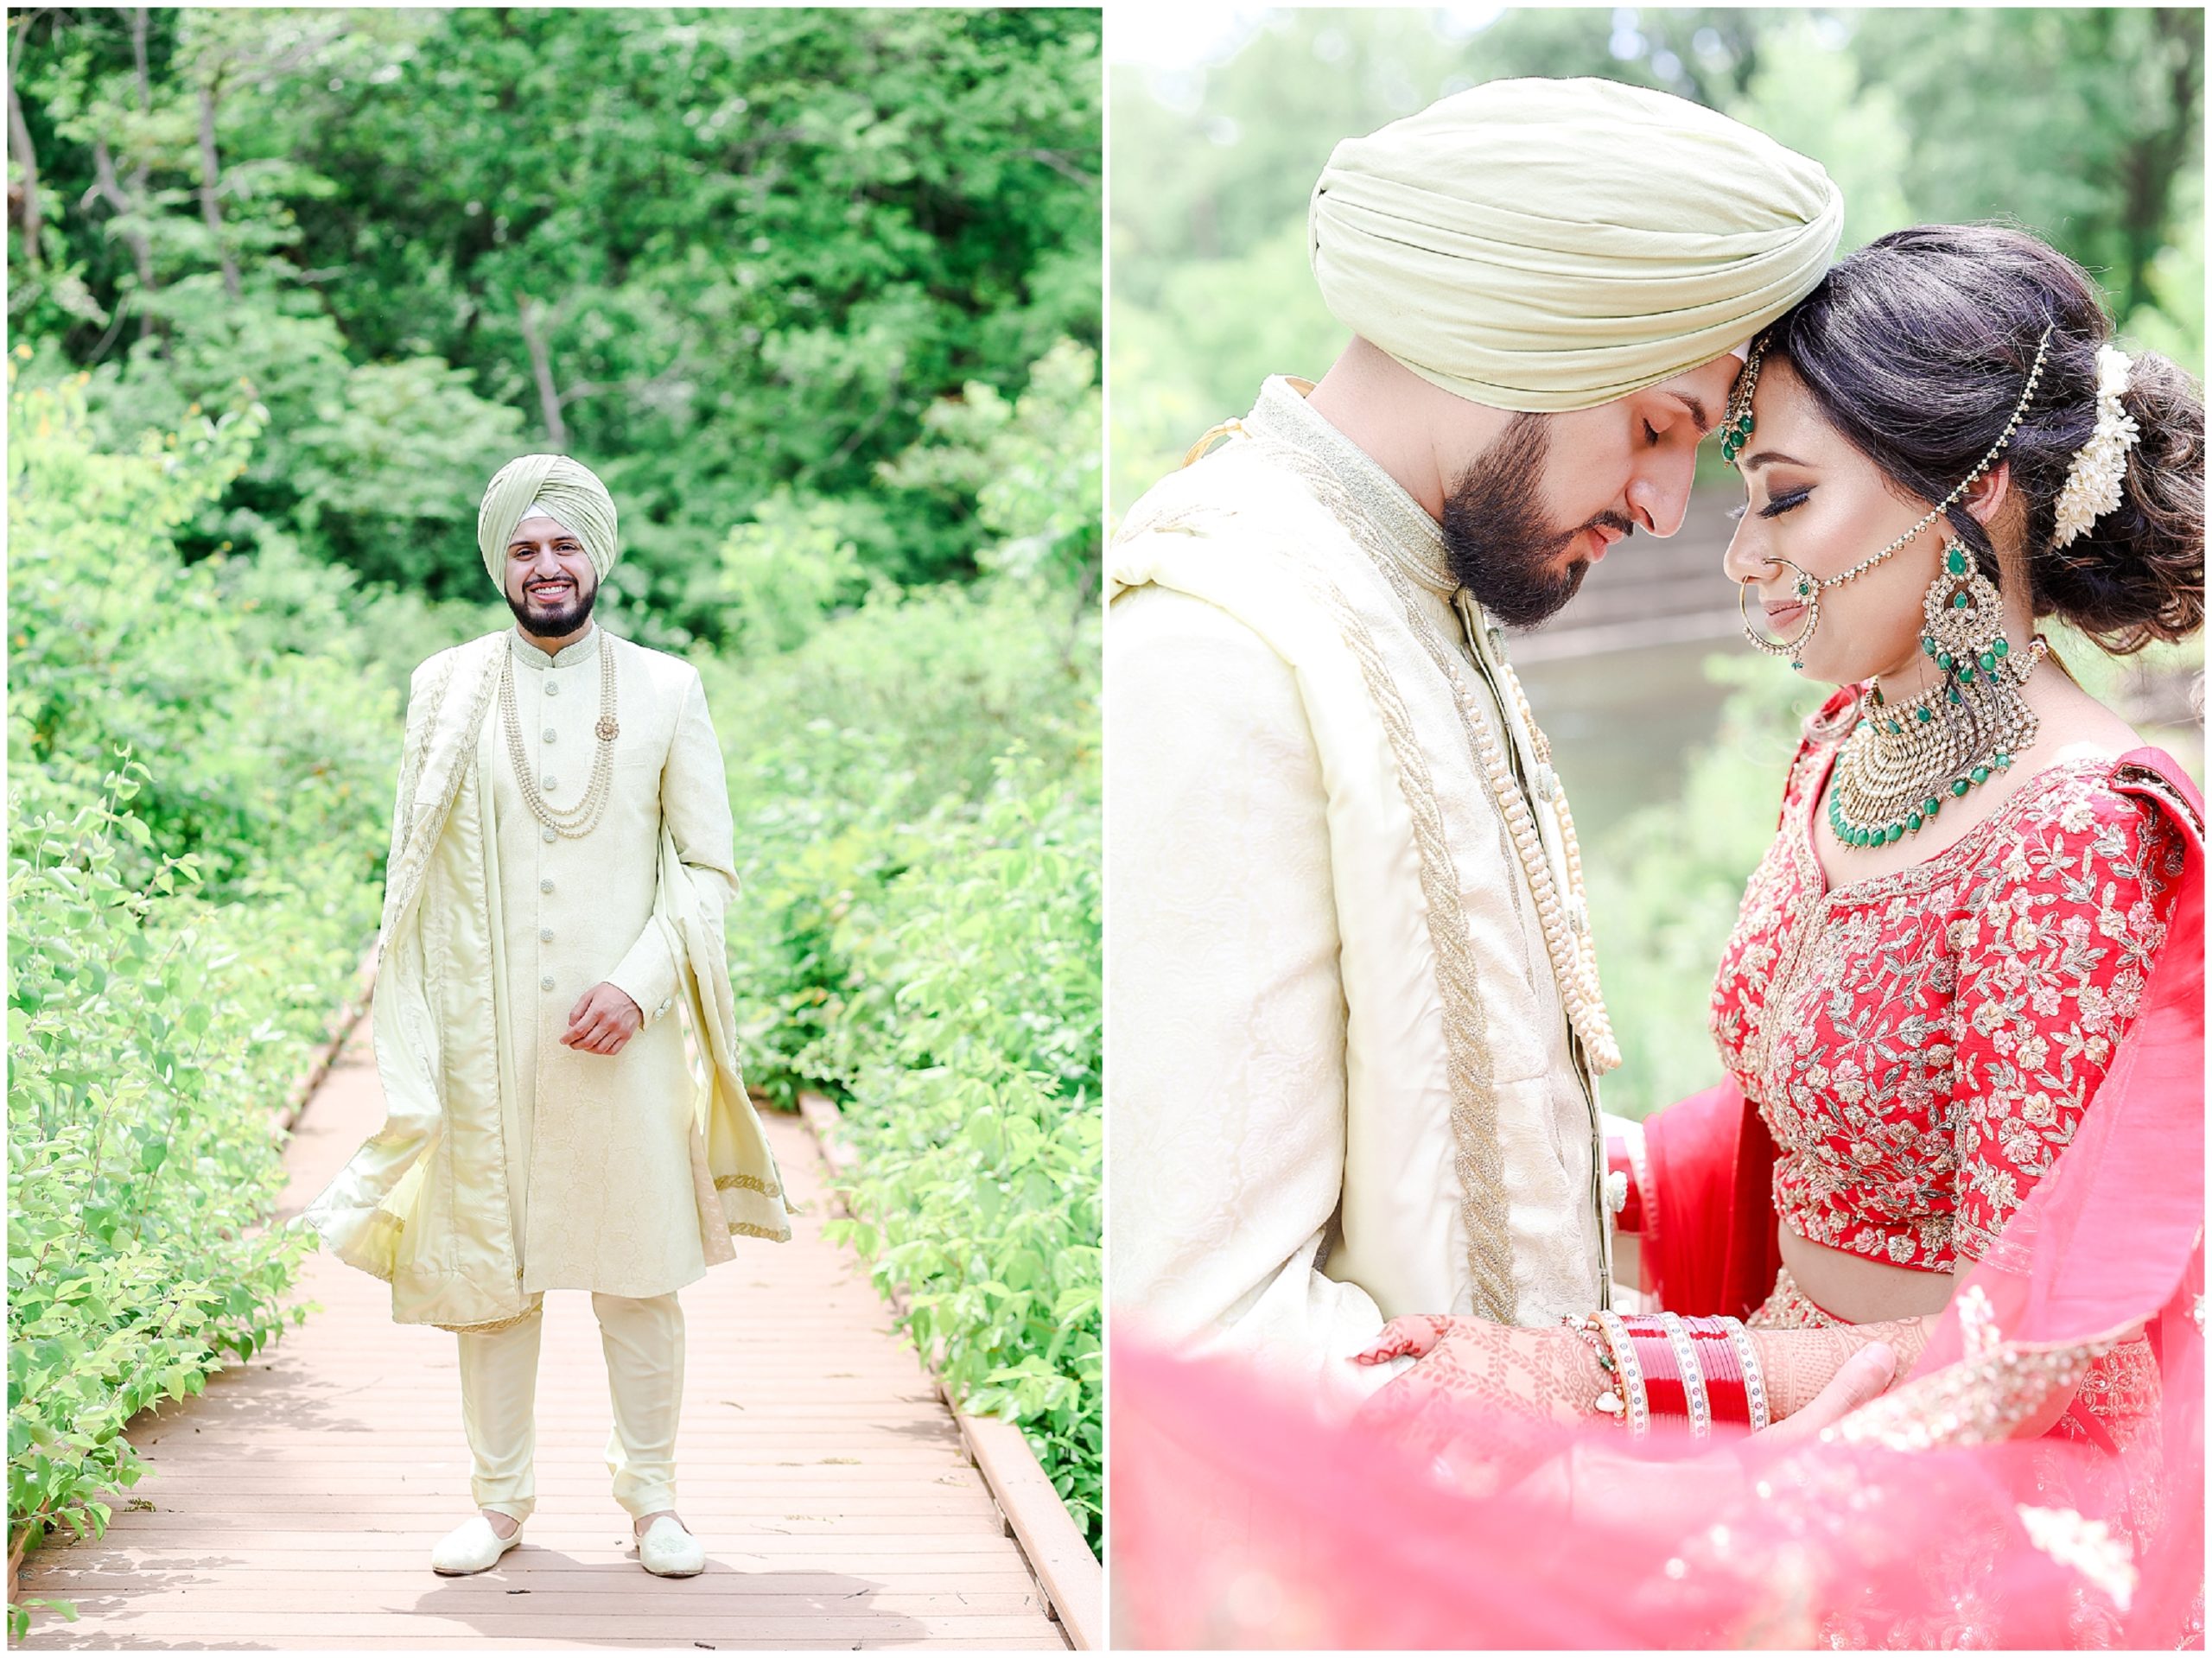 Wedding Photos at Shawnee MIssion Park in Kansas - KC Wedding Photography - SIkh Indian Fusion Wedding Portraits